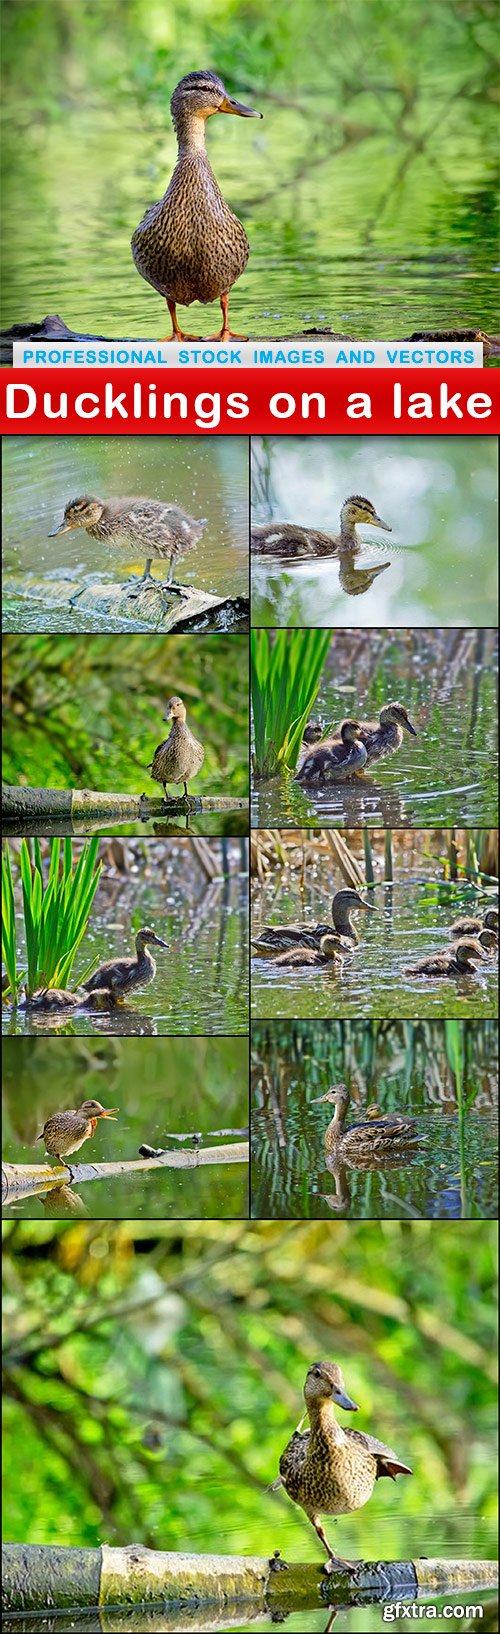 Ducklings on a lake - 10 UHQ JPEG